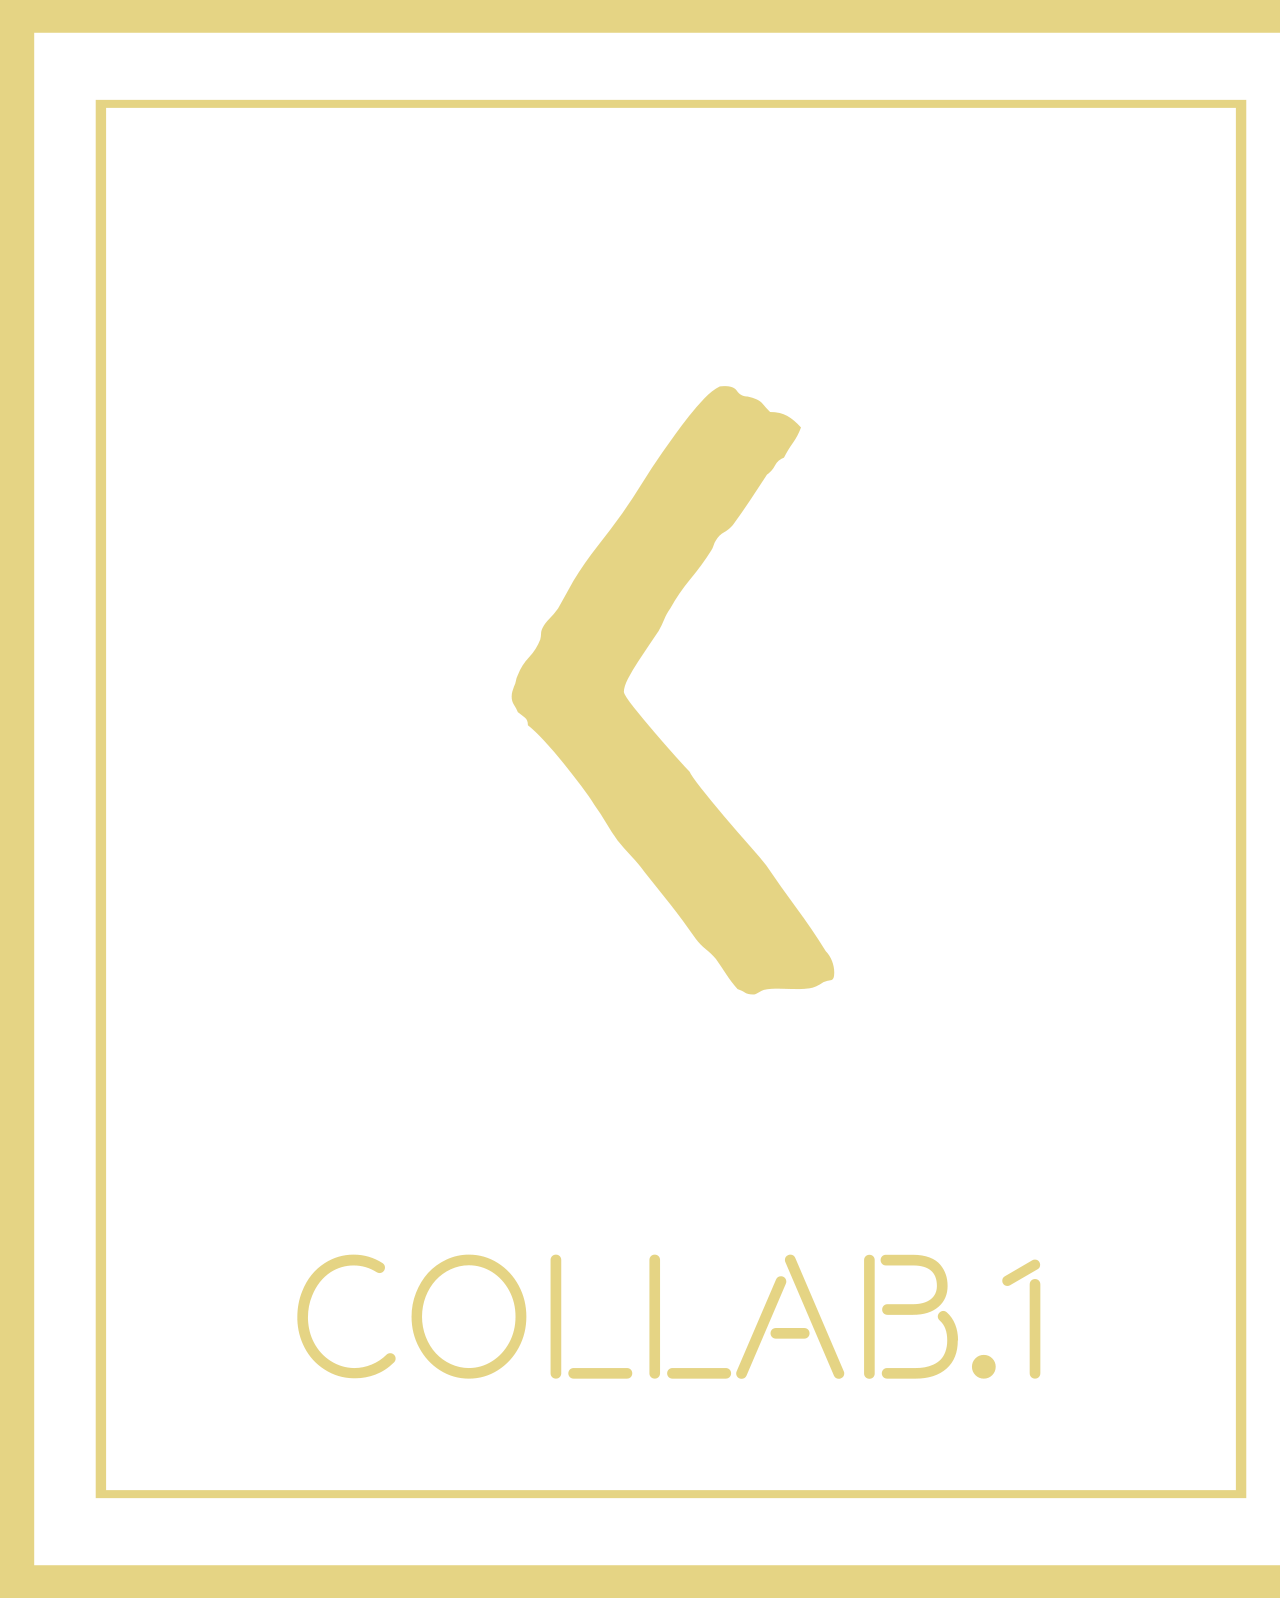 Collab.1's logo